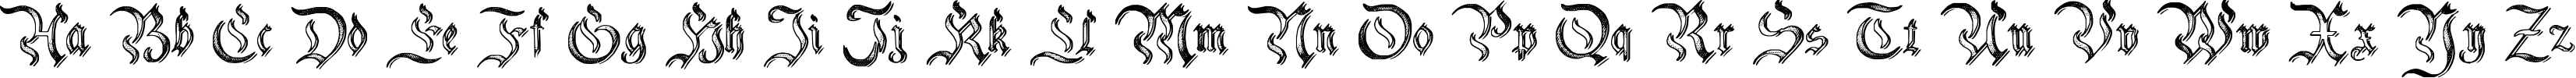 Пример написания английского алфавита шрифтом Charterwell No2